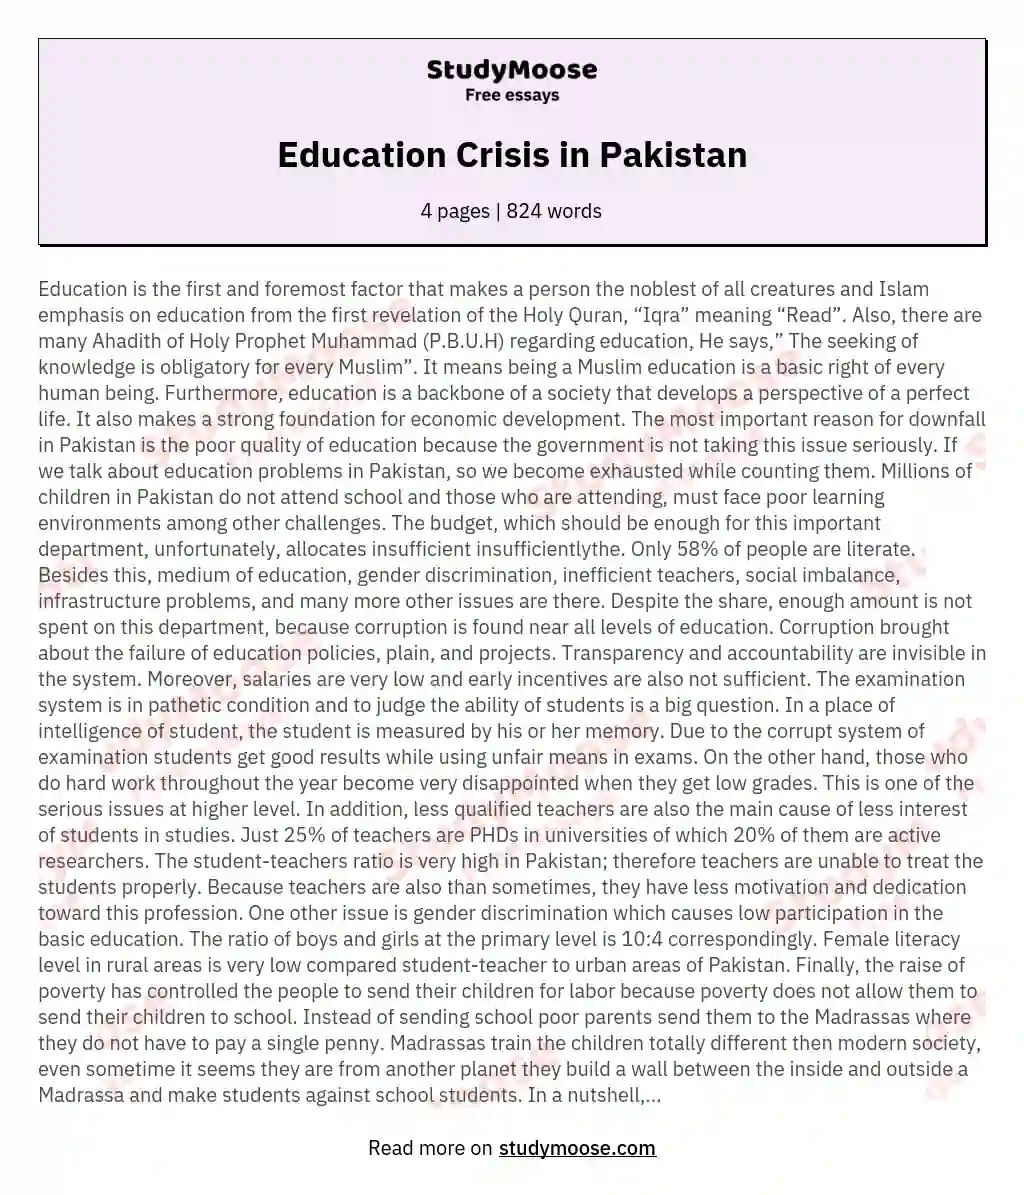 Education Crisis in Pakistan essay